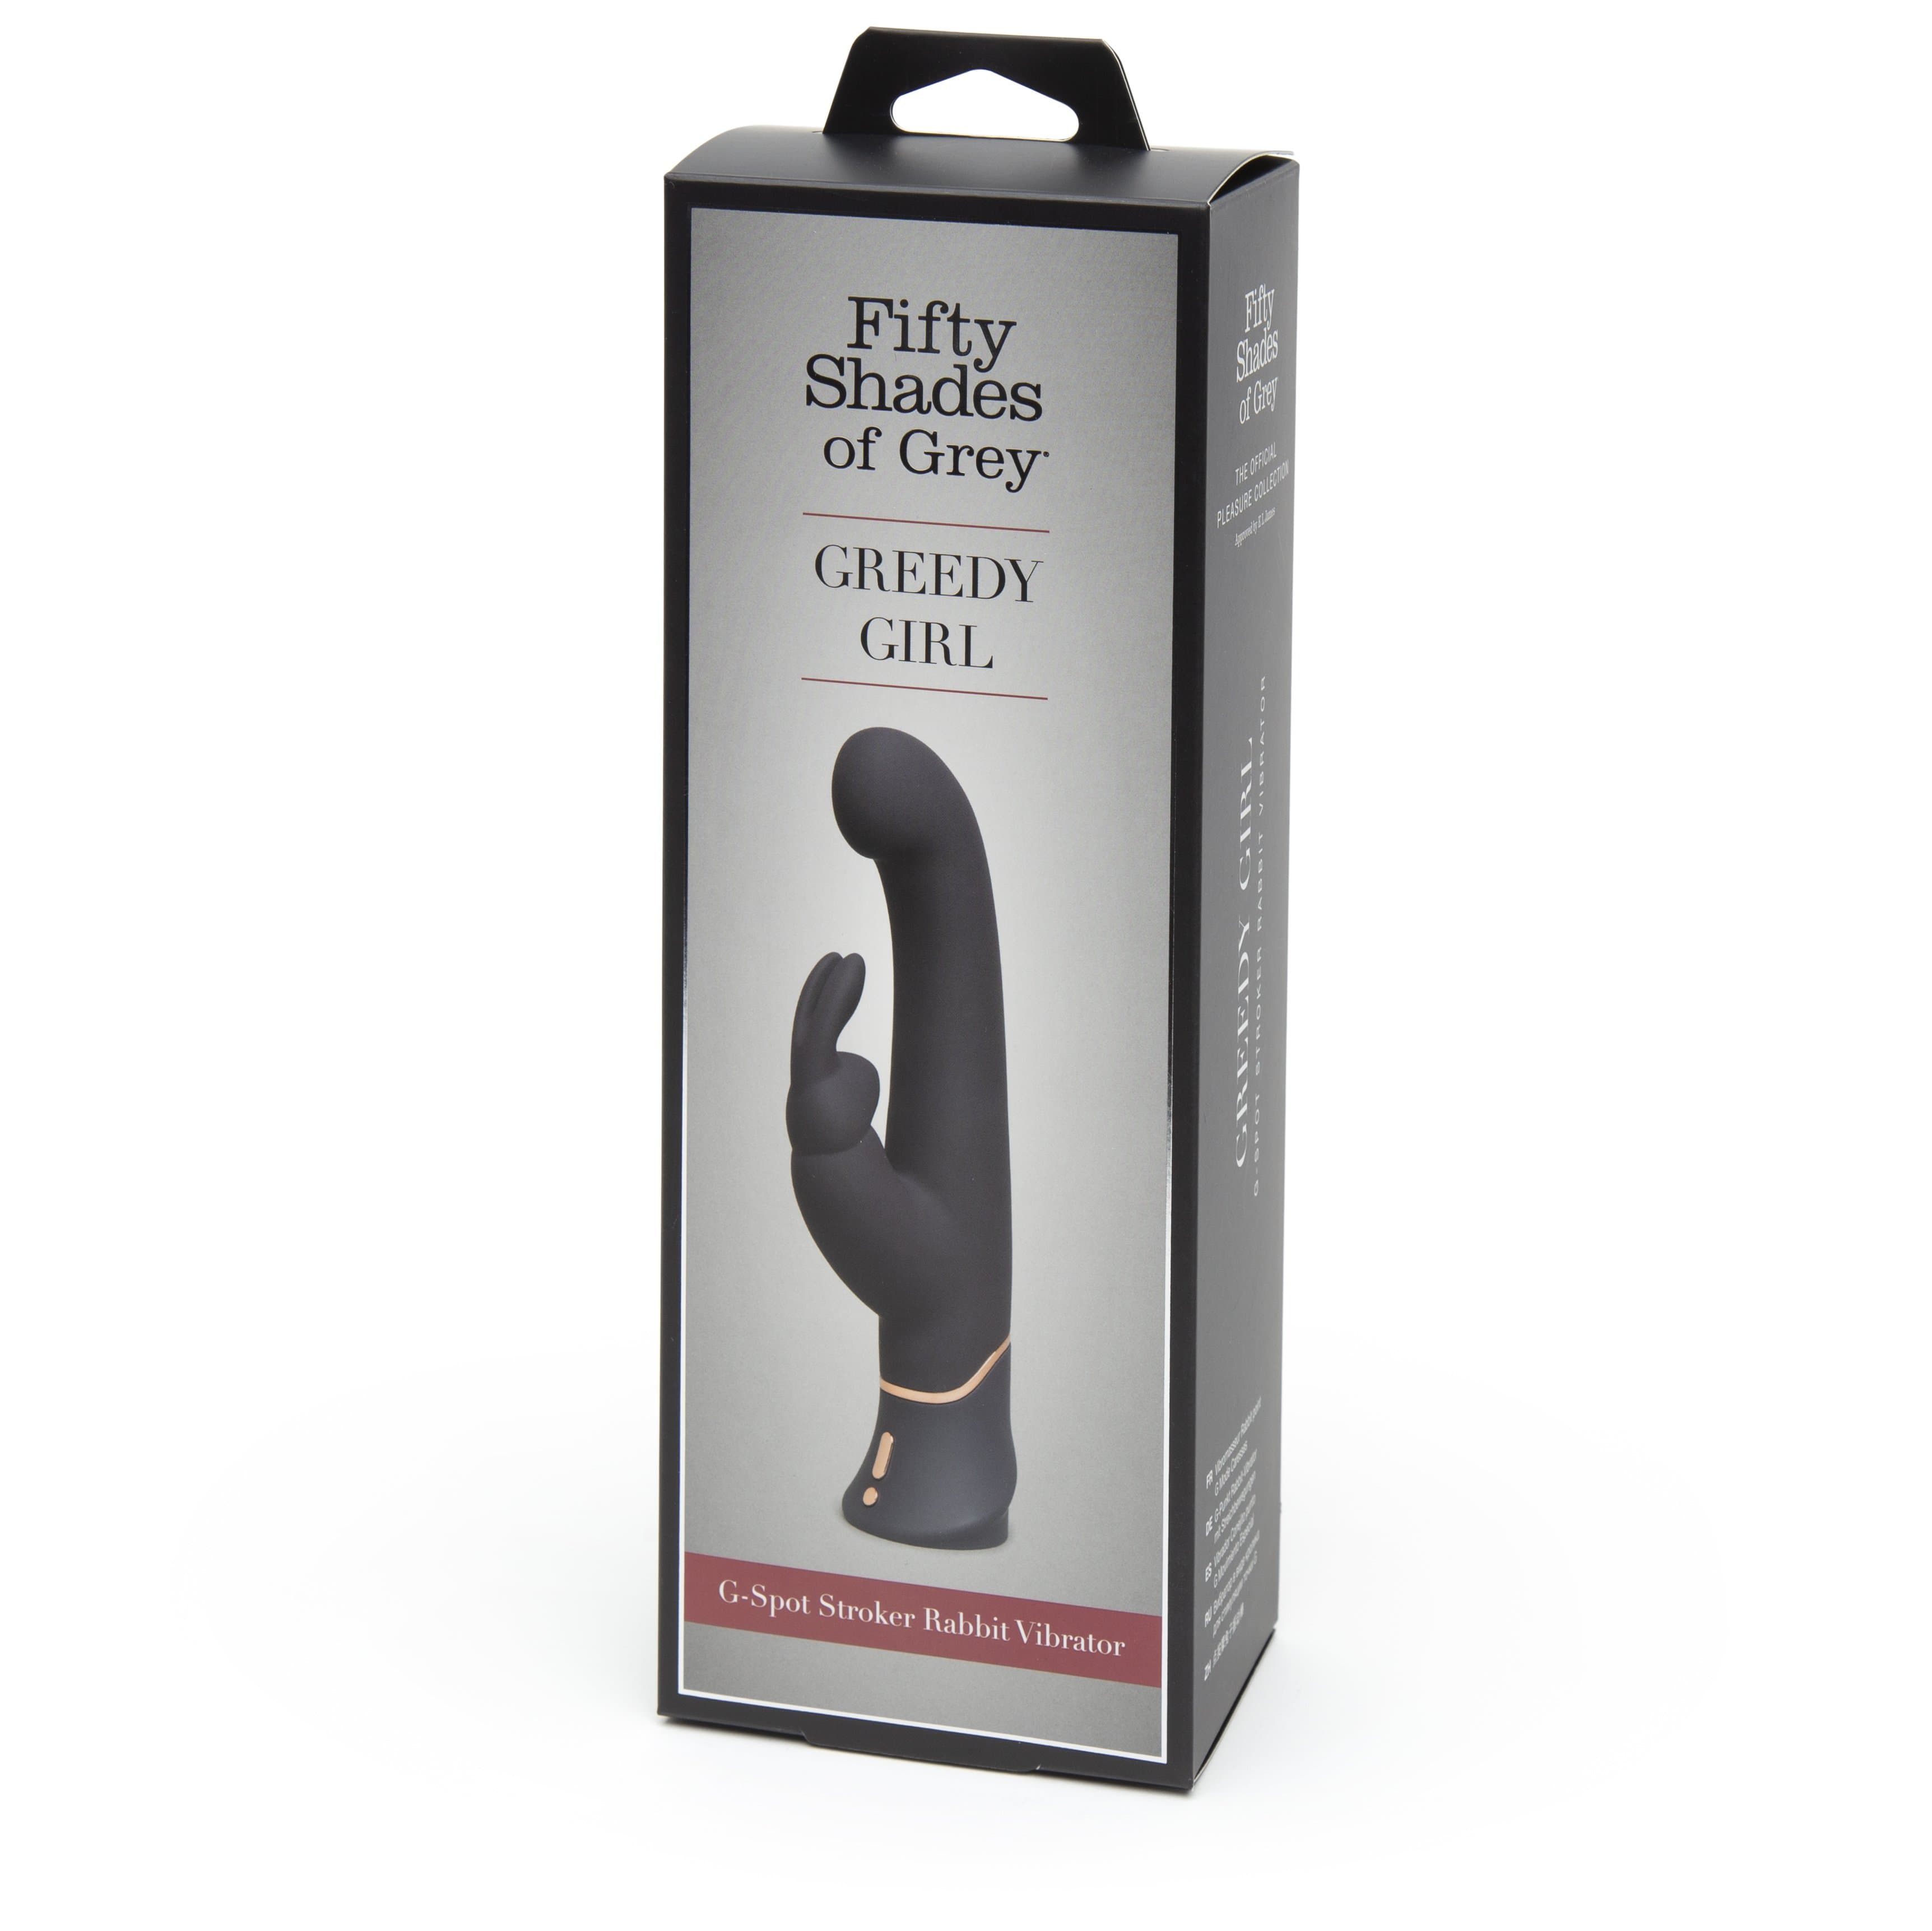 Fifty Shades of Grey - Greedy Girl G Spot Stroker Rabbit Vibrator (Black) Cherryaffairs